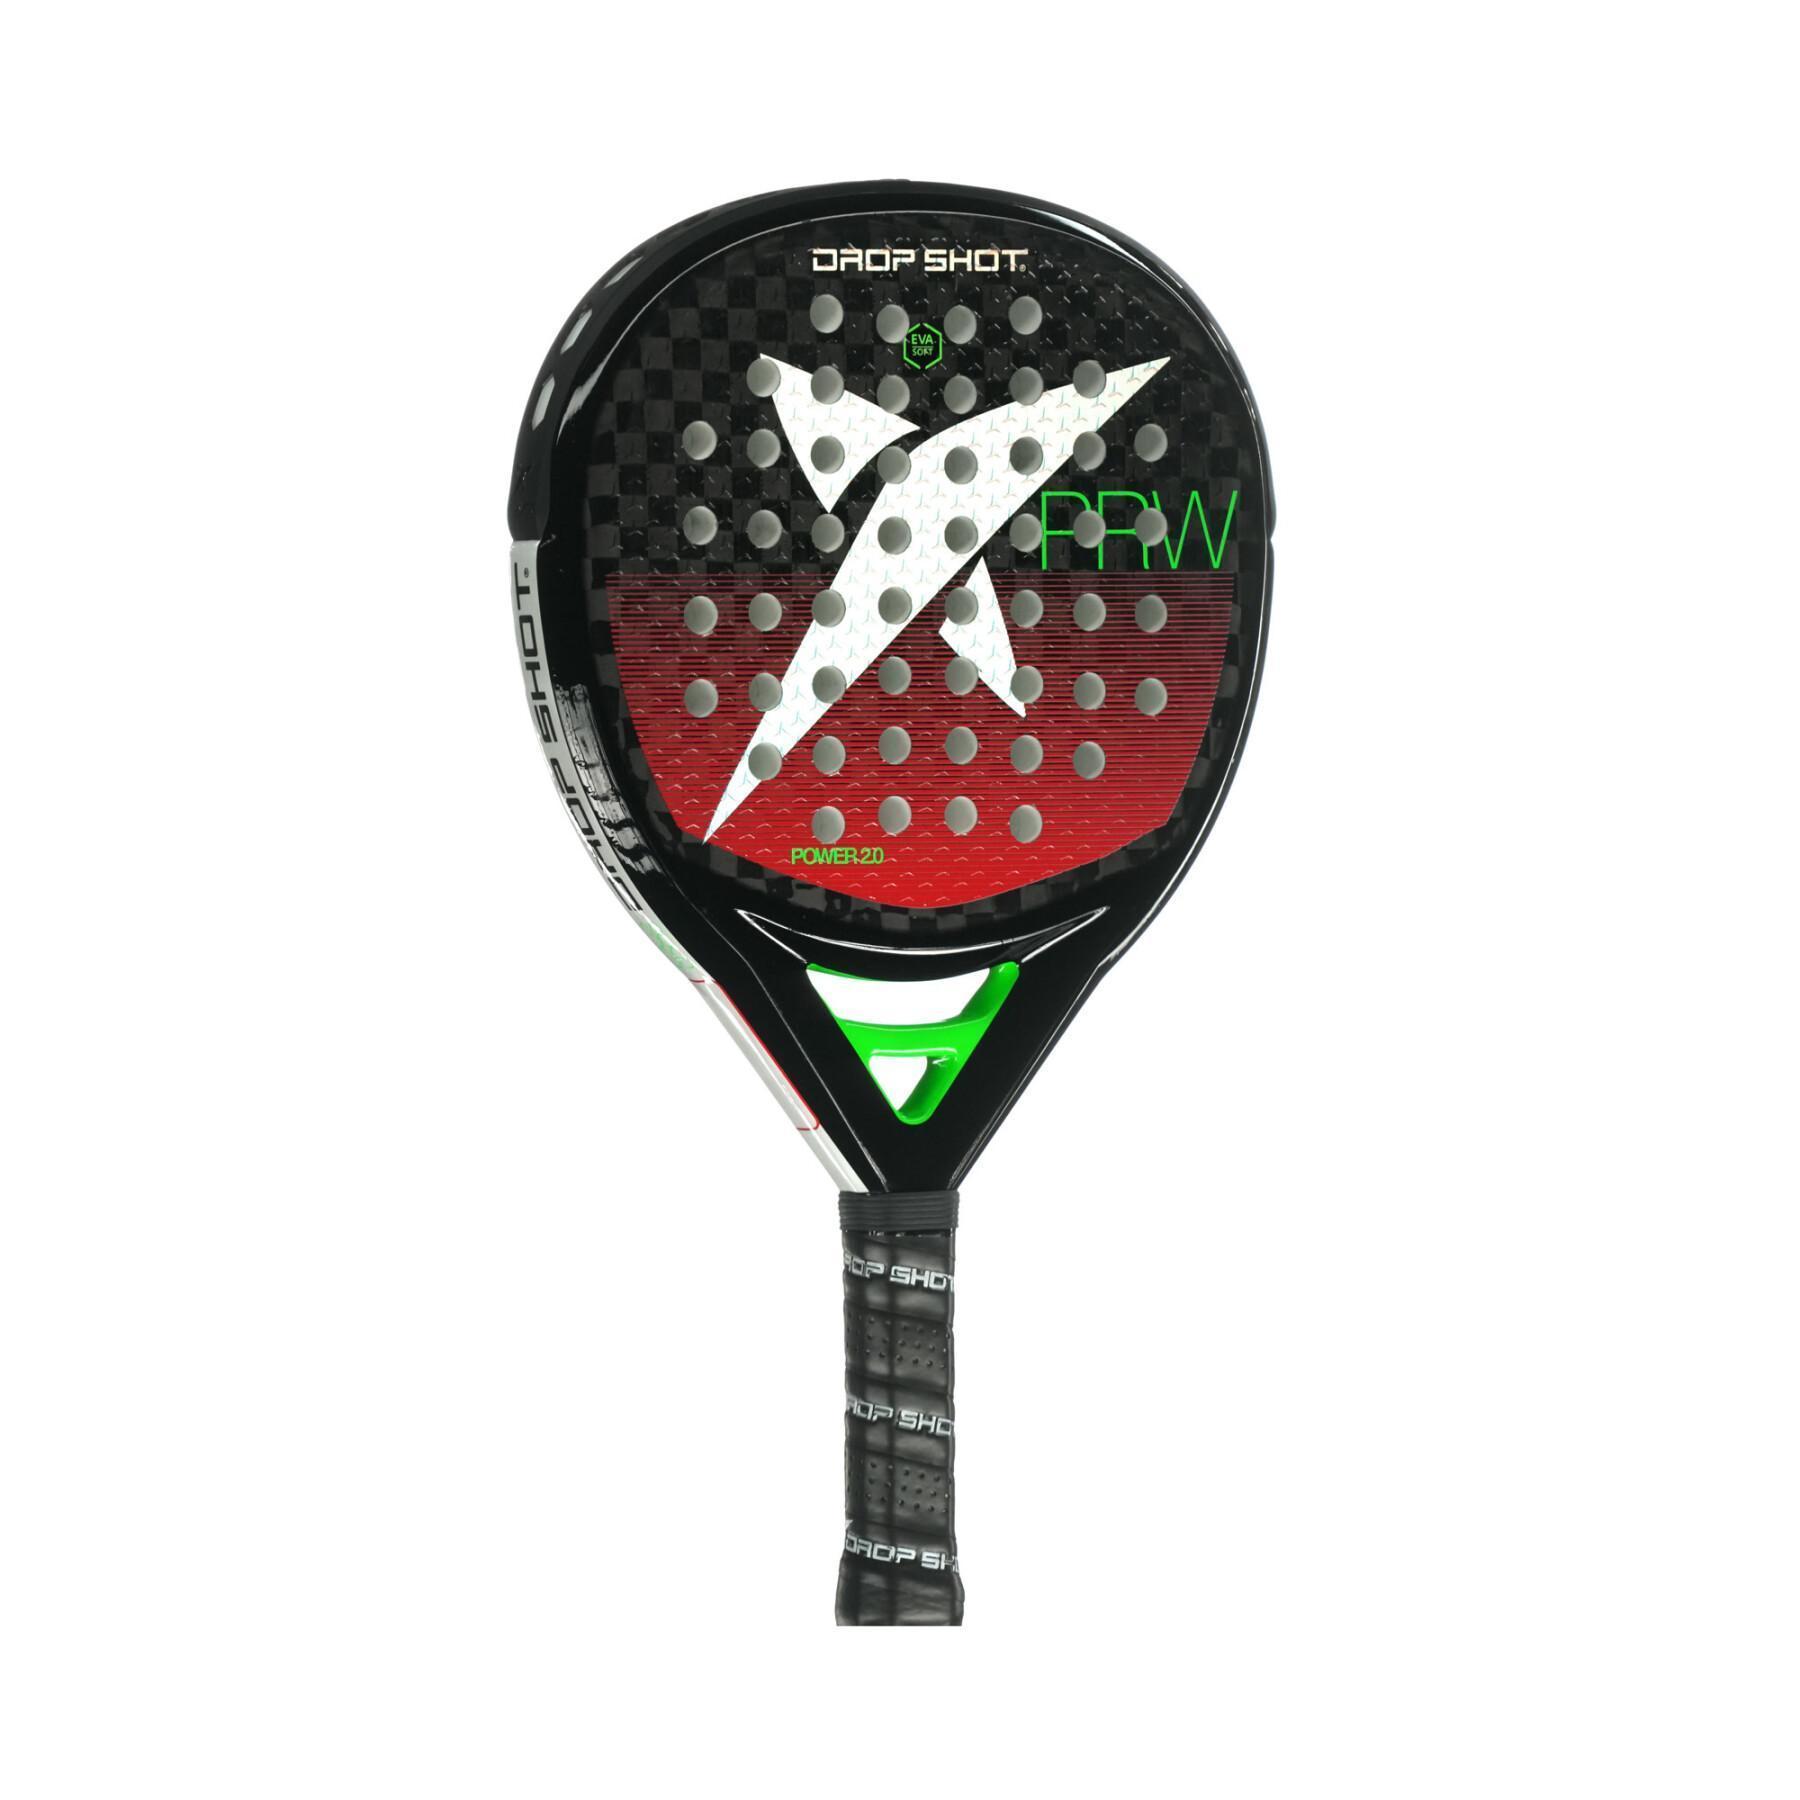 Racket Dropshot power 2.0